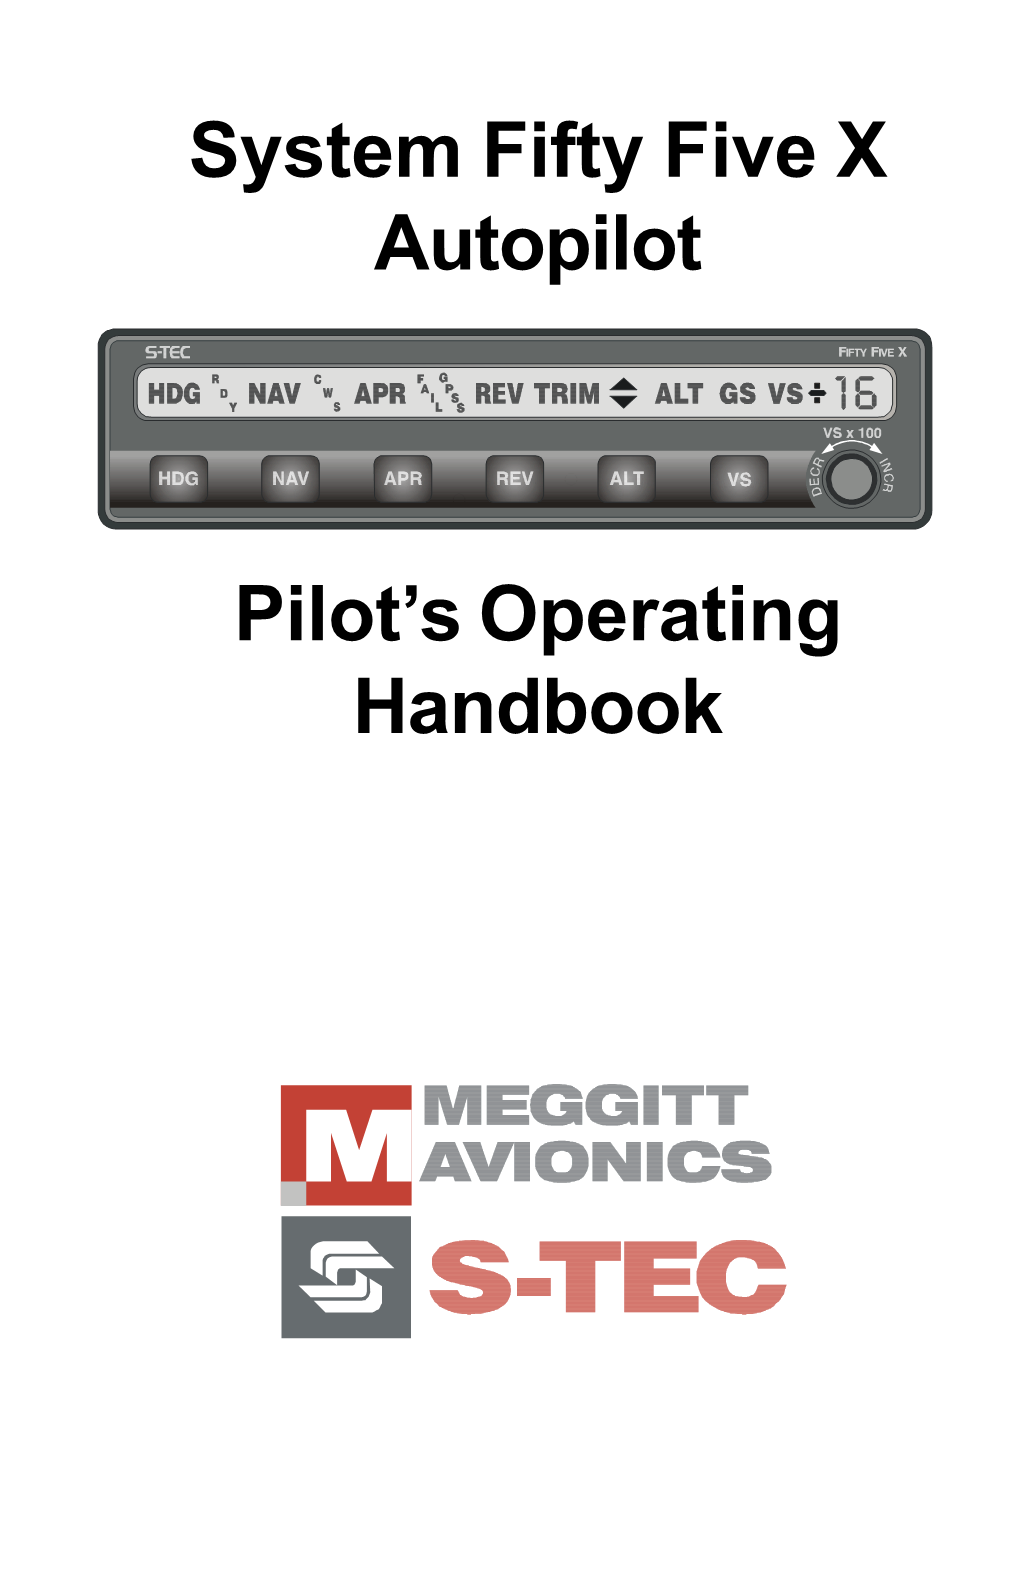 System Fifty Five X Autopilot Pilot's Operating Handbook